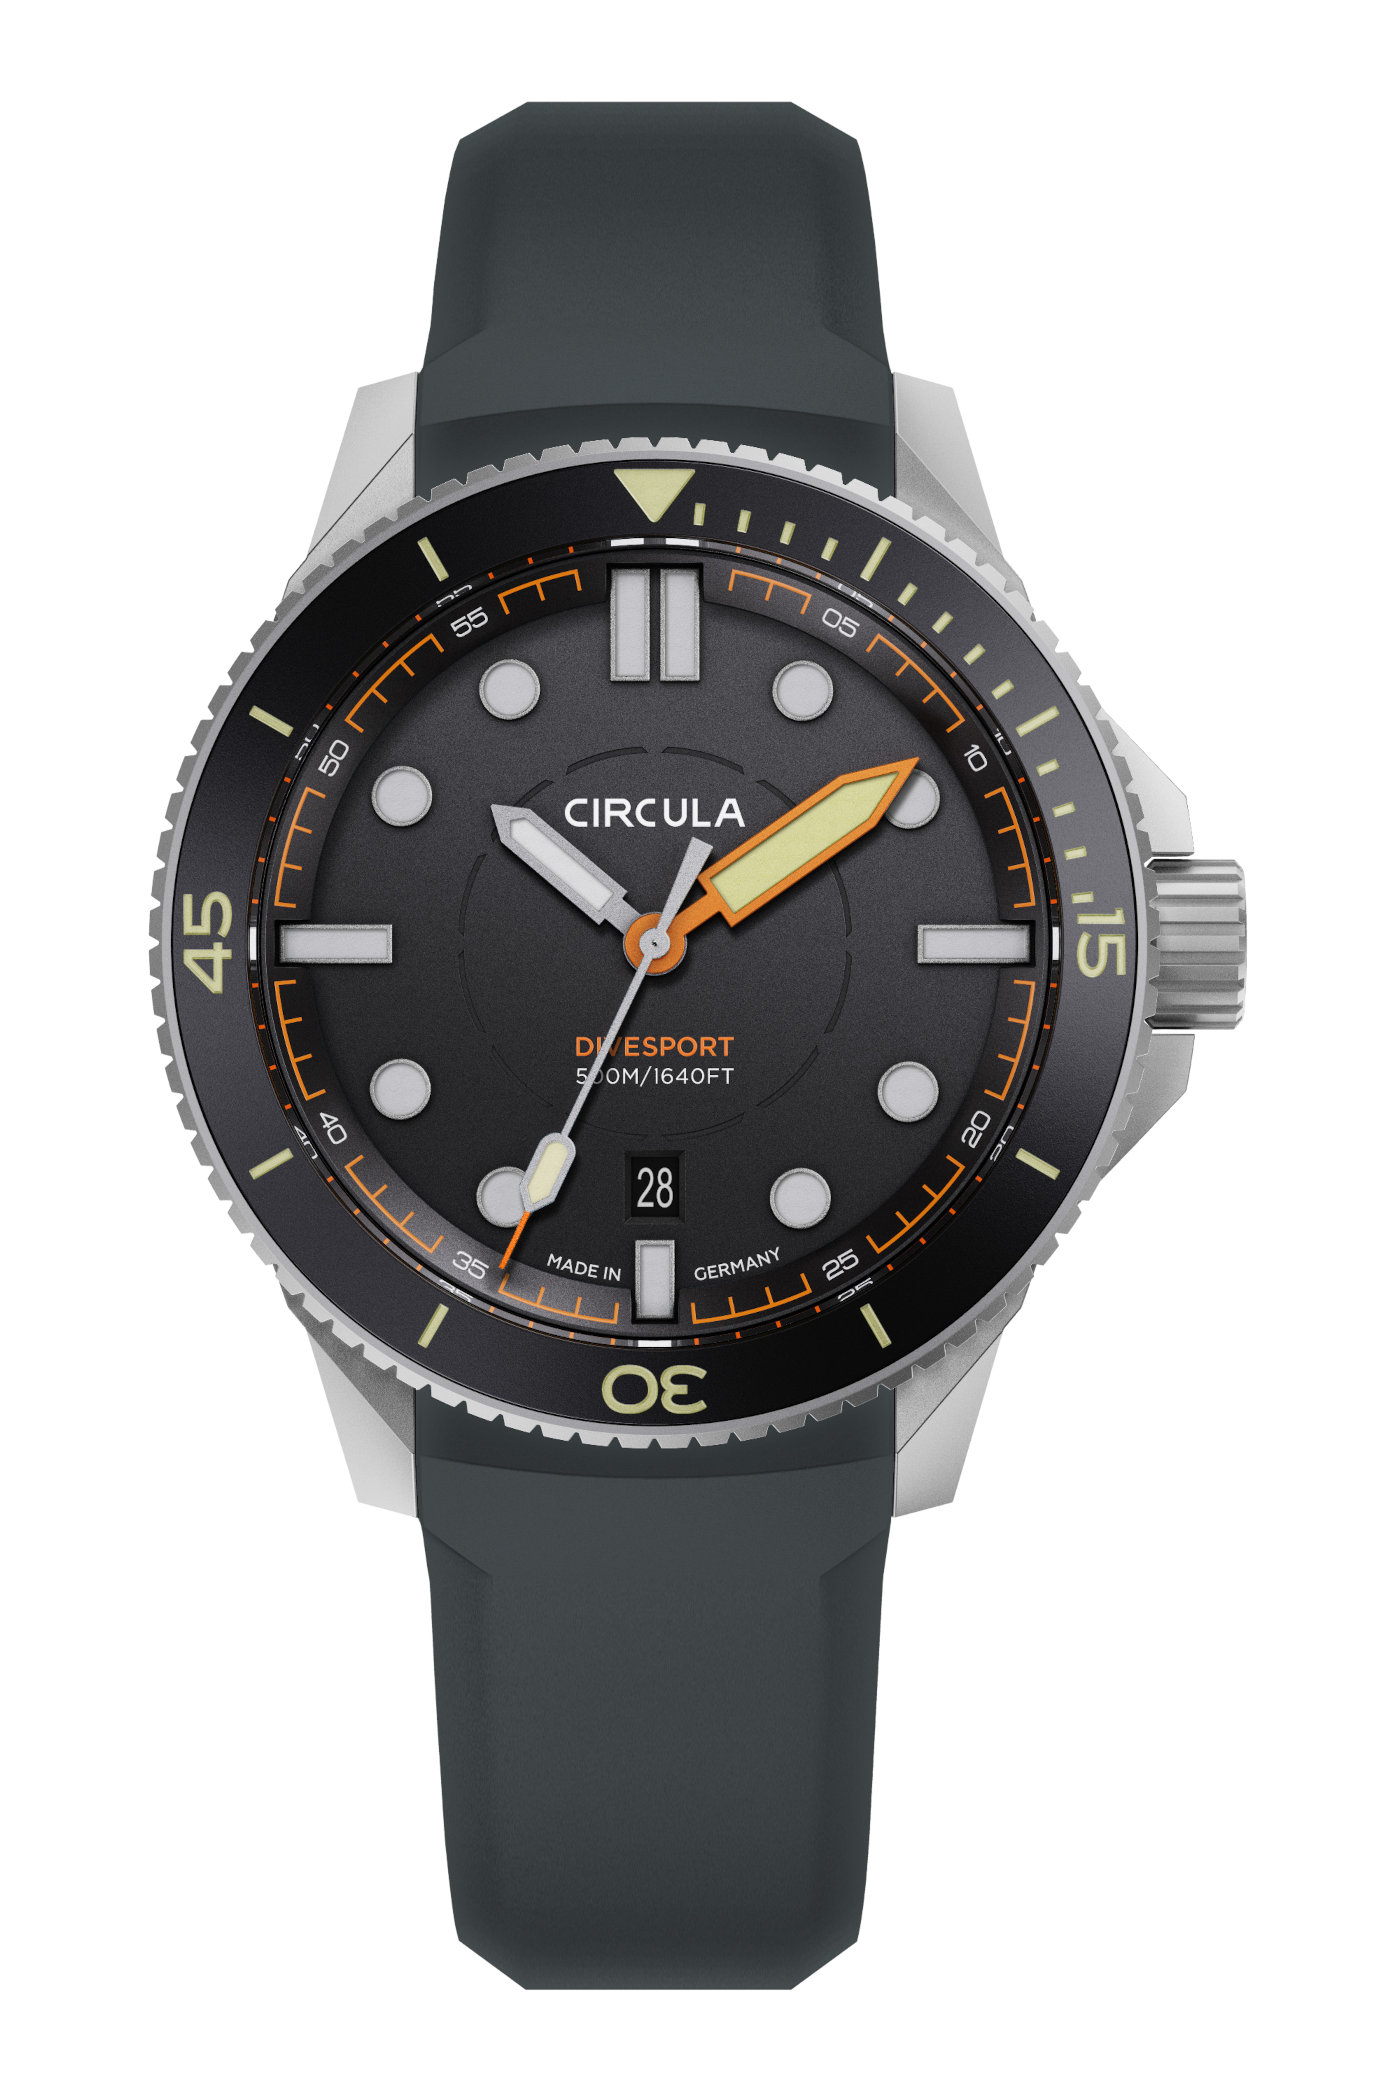 Circula DiveSport - Titanium black dial - Featured